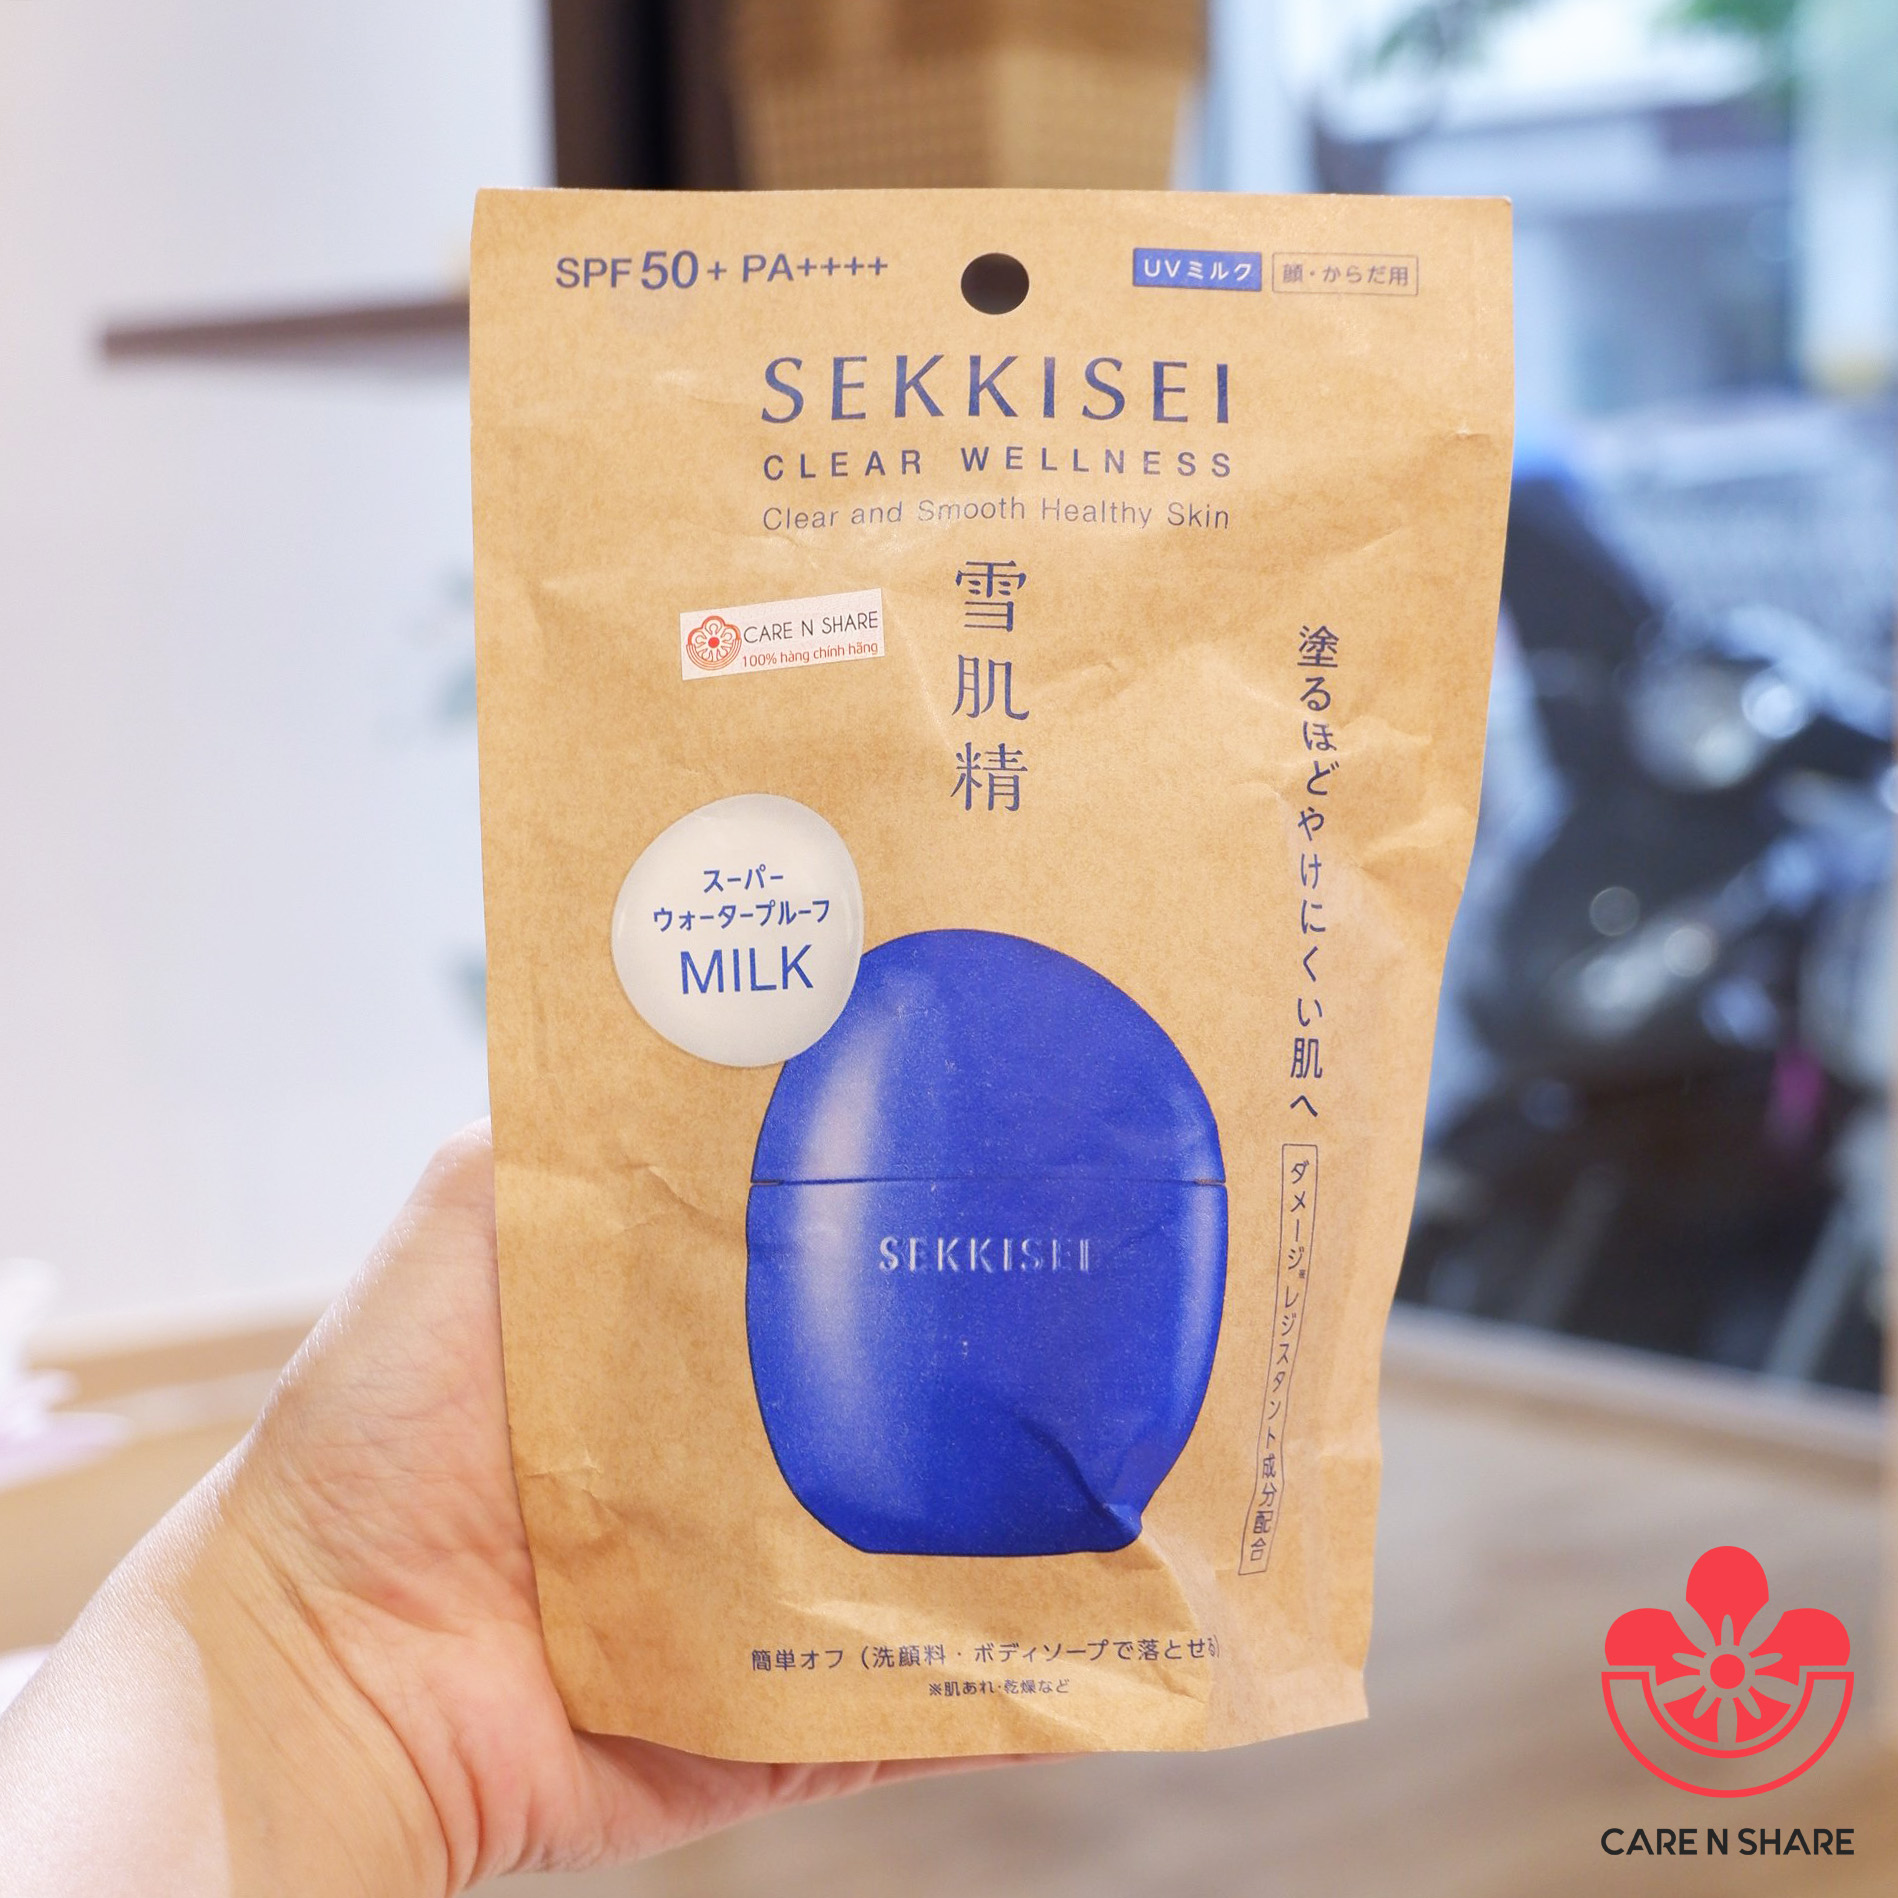 SEKKISEI Clear Wellness UV Defense Milk